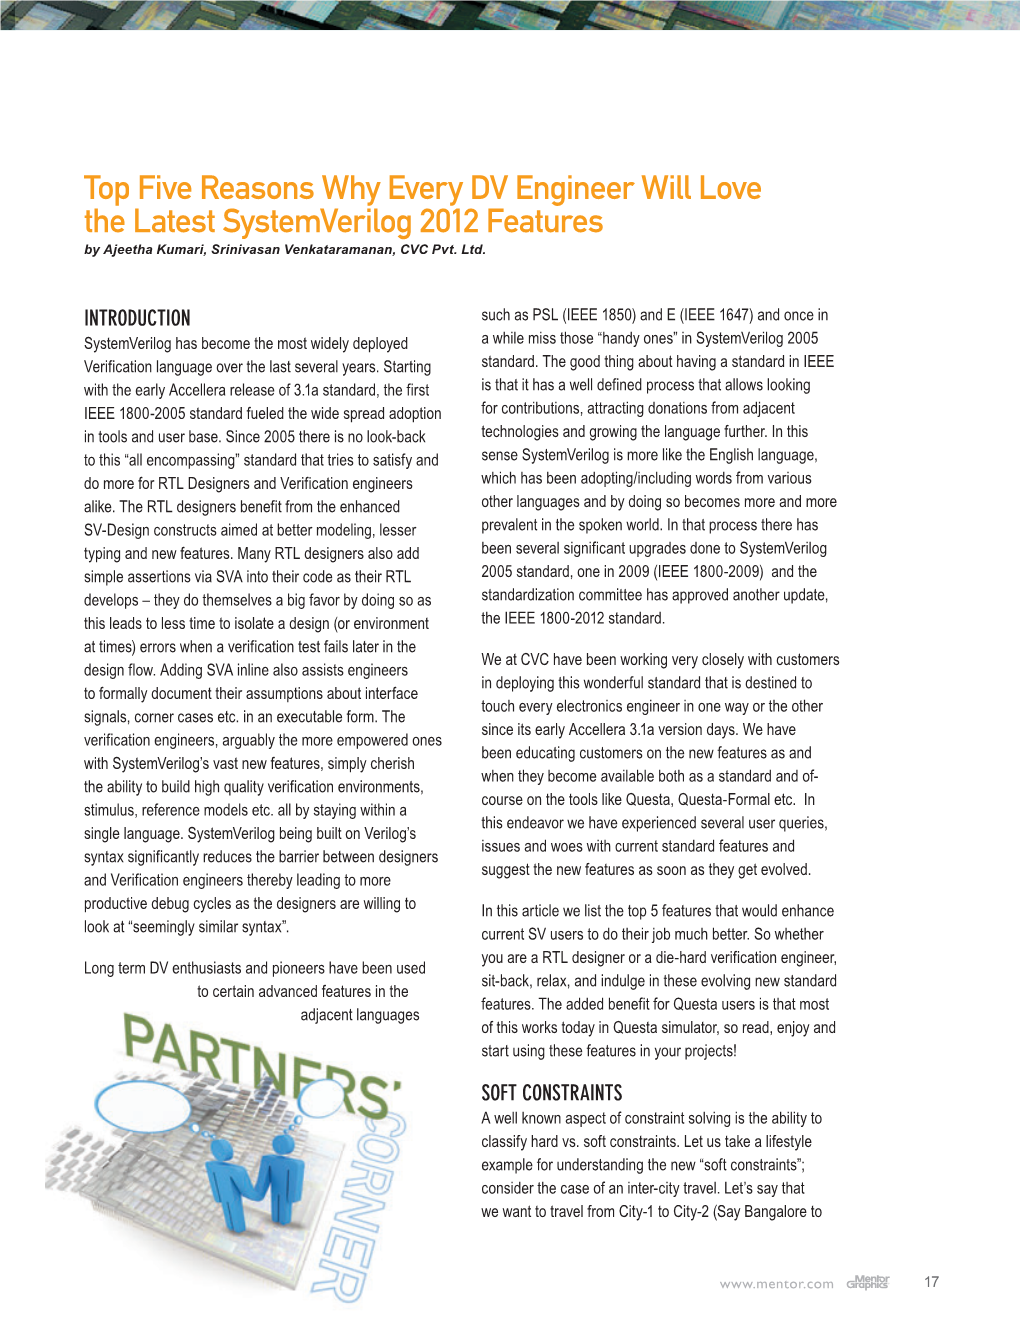 Top Five Reasons Why Every DV Engineer Will Love the Latest Systemverilog 2012 Features by Ajeetha Kumari, Srinivasan Venkataramanan, CVC Pvt